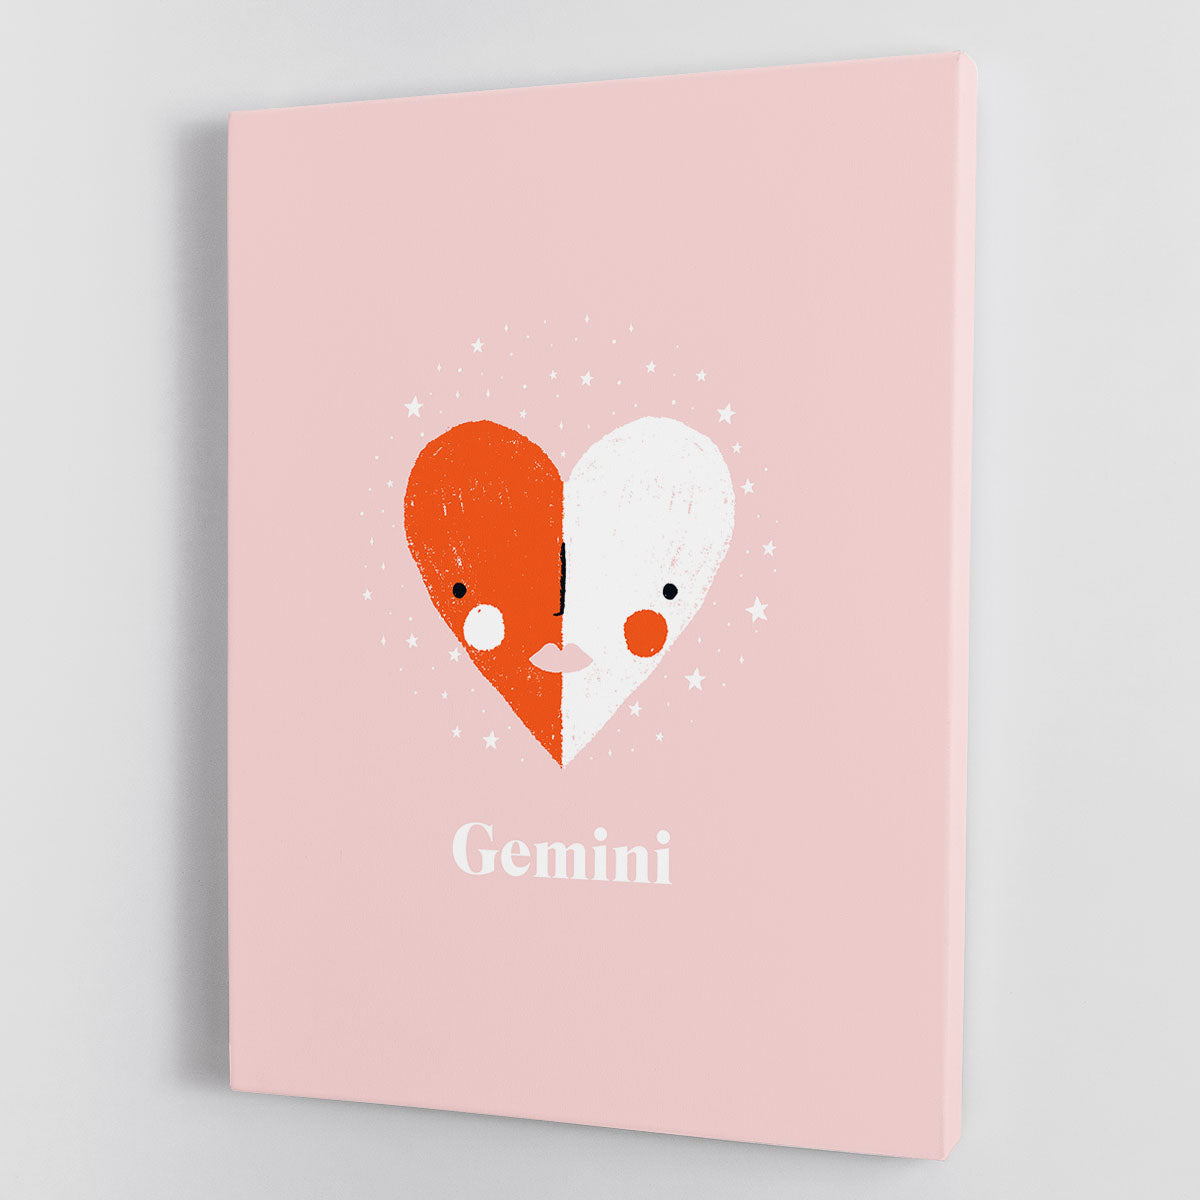 Gemini Motivation Print Canvas Print or Poster - Canvas Art Rocks - 1